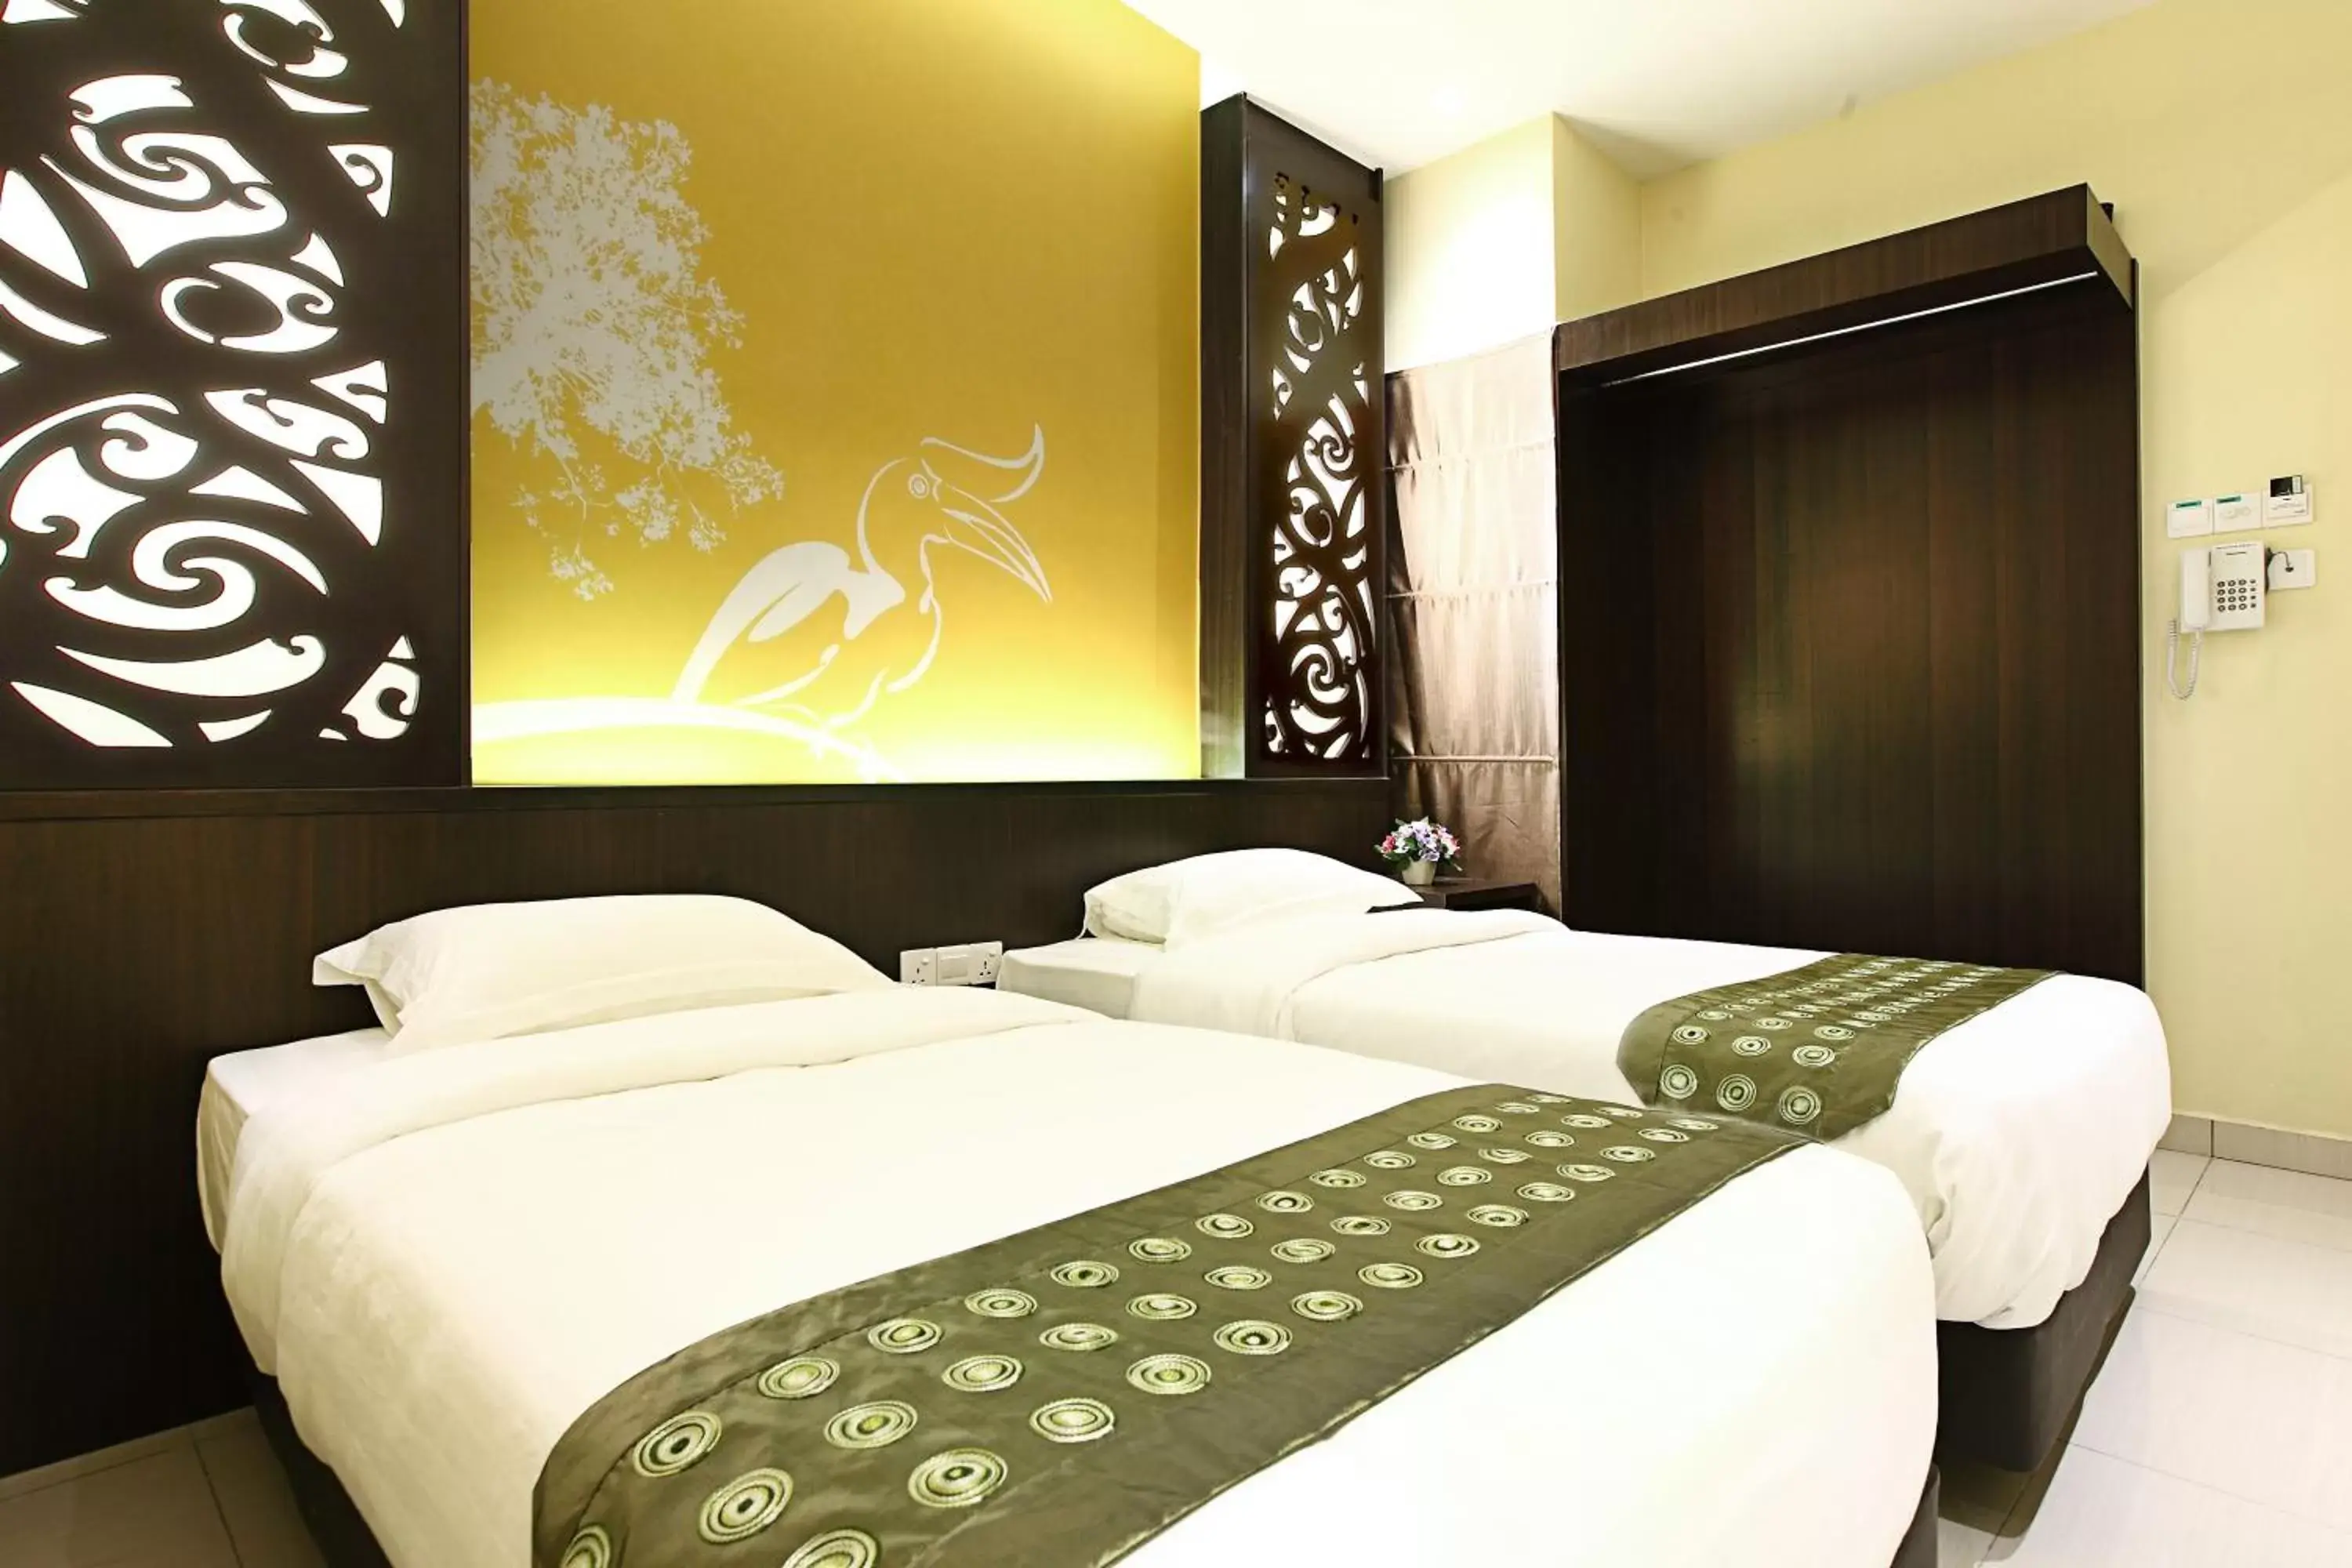 Photo of the whole room, Bed in Sri Enstek Hotel KLIA, KLIA 2 & F1